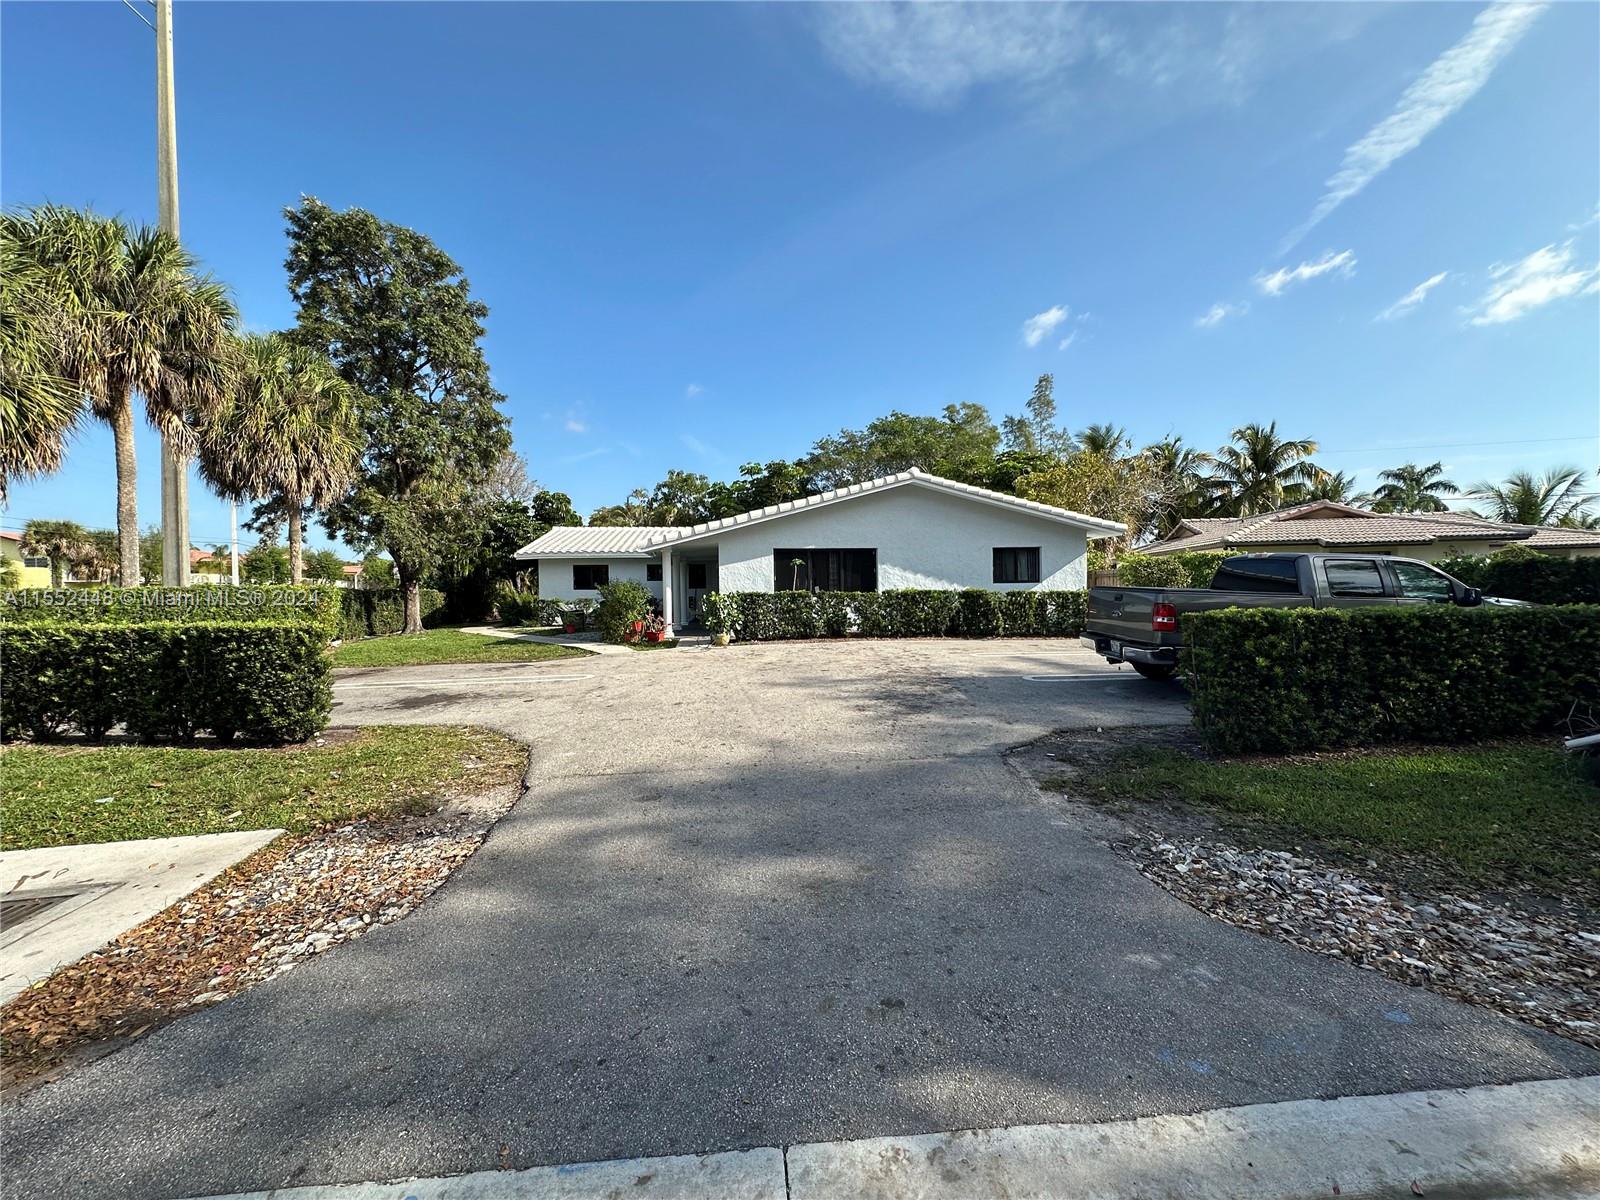 Rental Property at 3741 Riverside Dr, Coral Springs, Broward County, Florida -  - $824,999 MO.